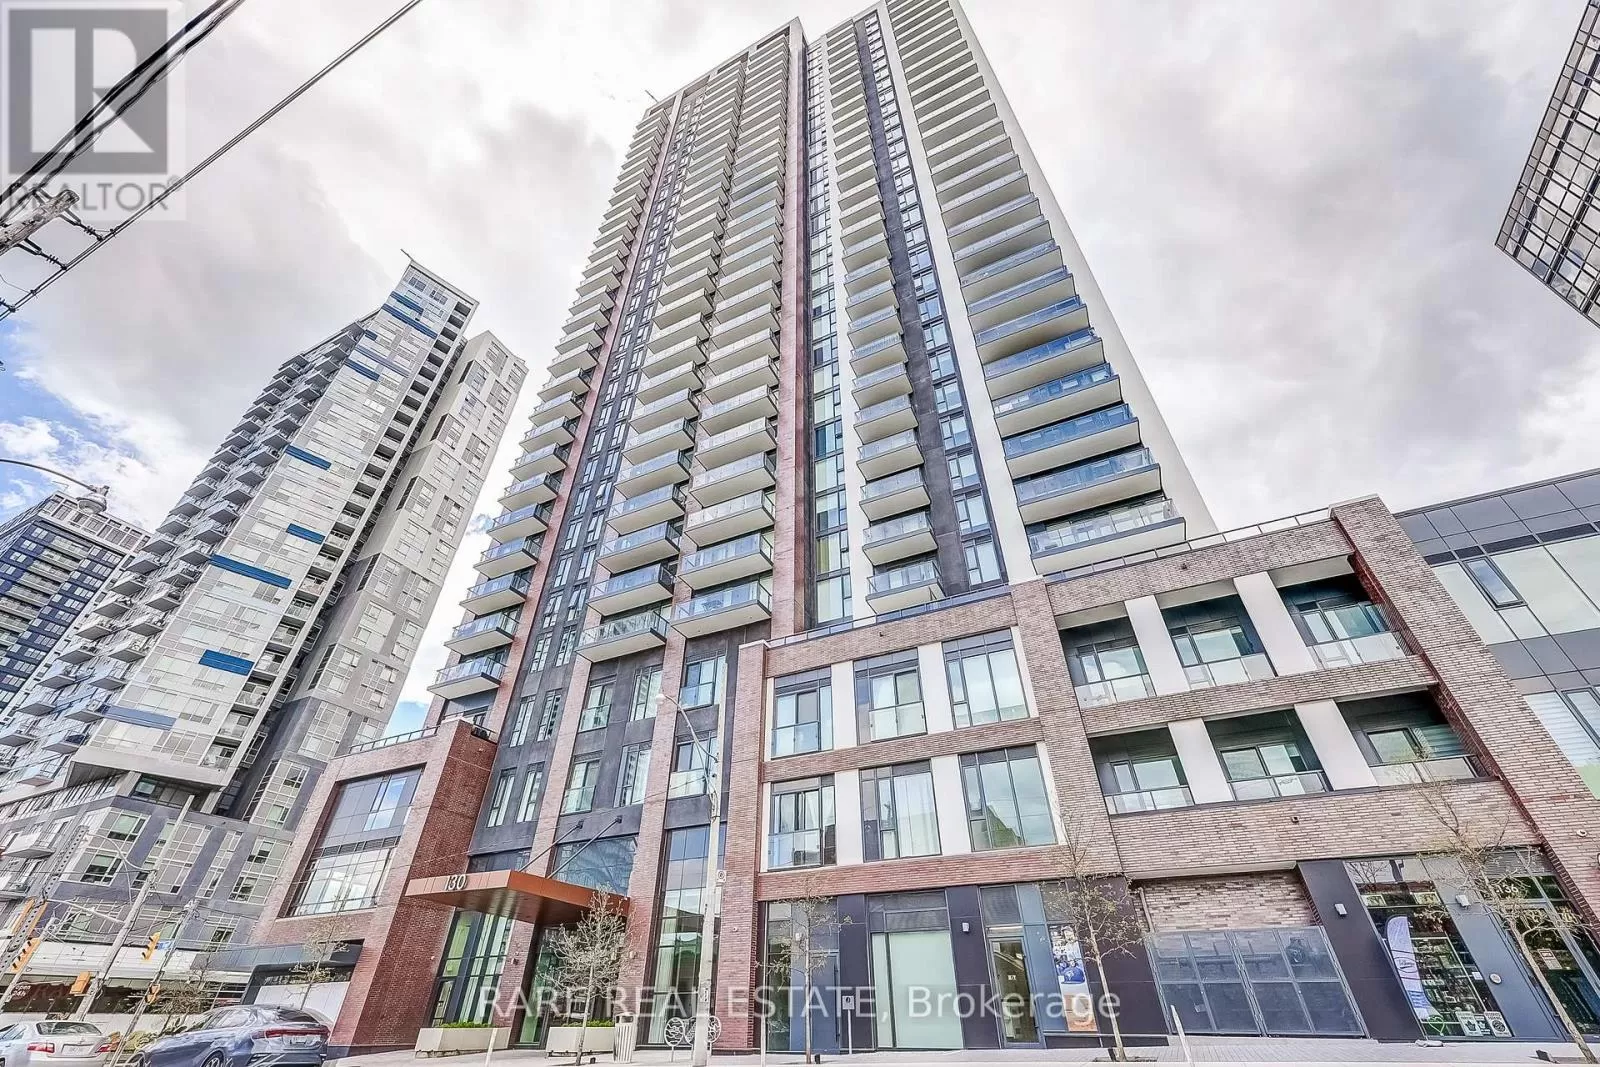 Apartment for rent: 701 - 130 River Street, Toronto, Ontario M5A 0R8